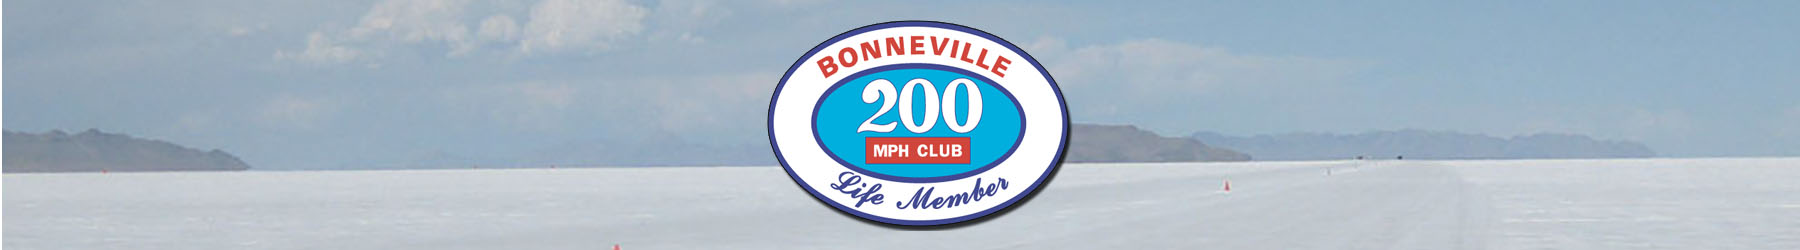 Bonneville200MPHclub